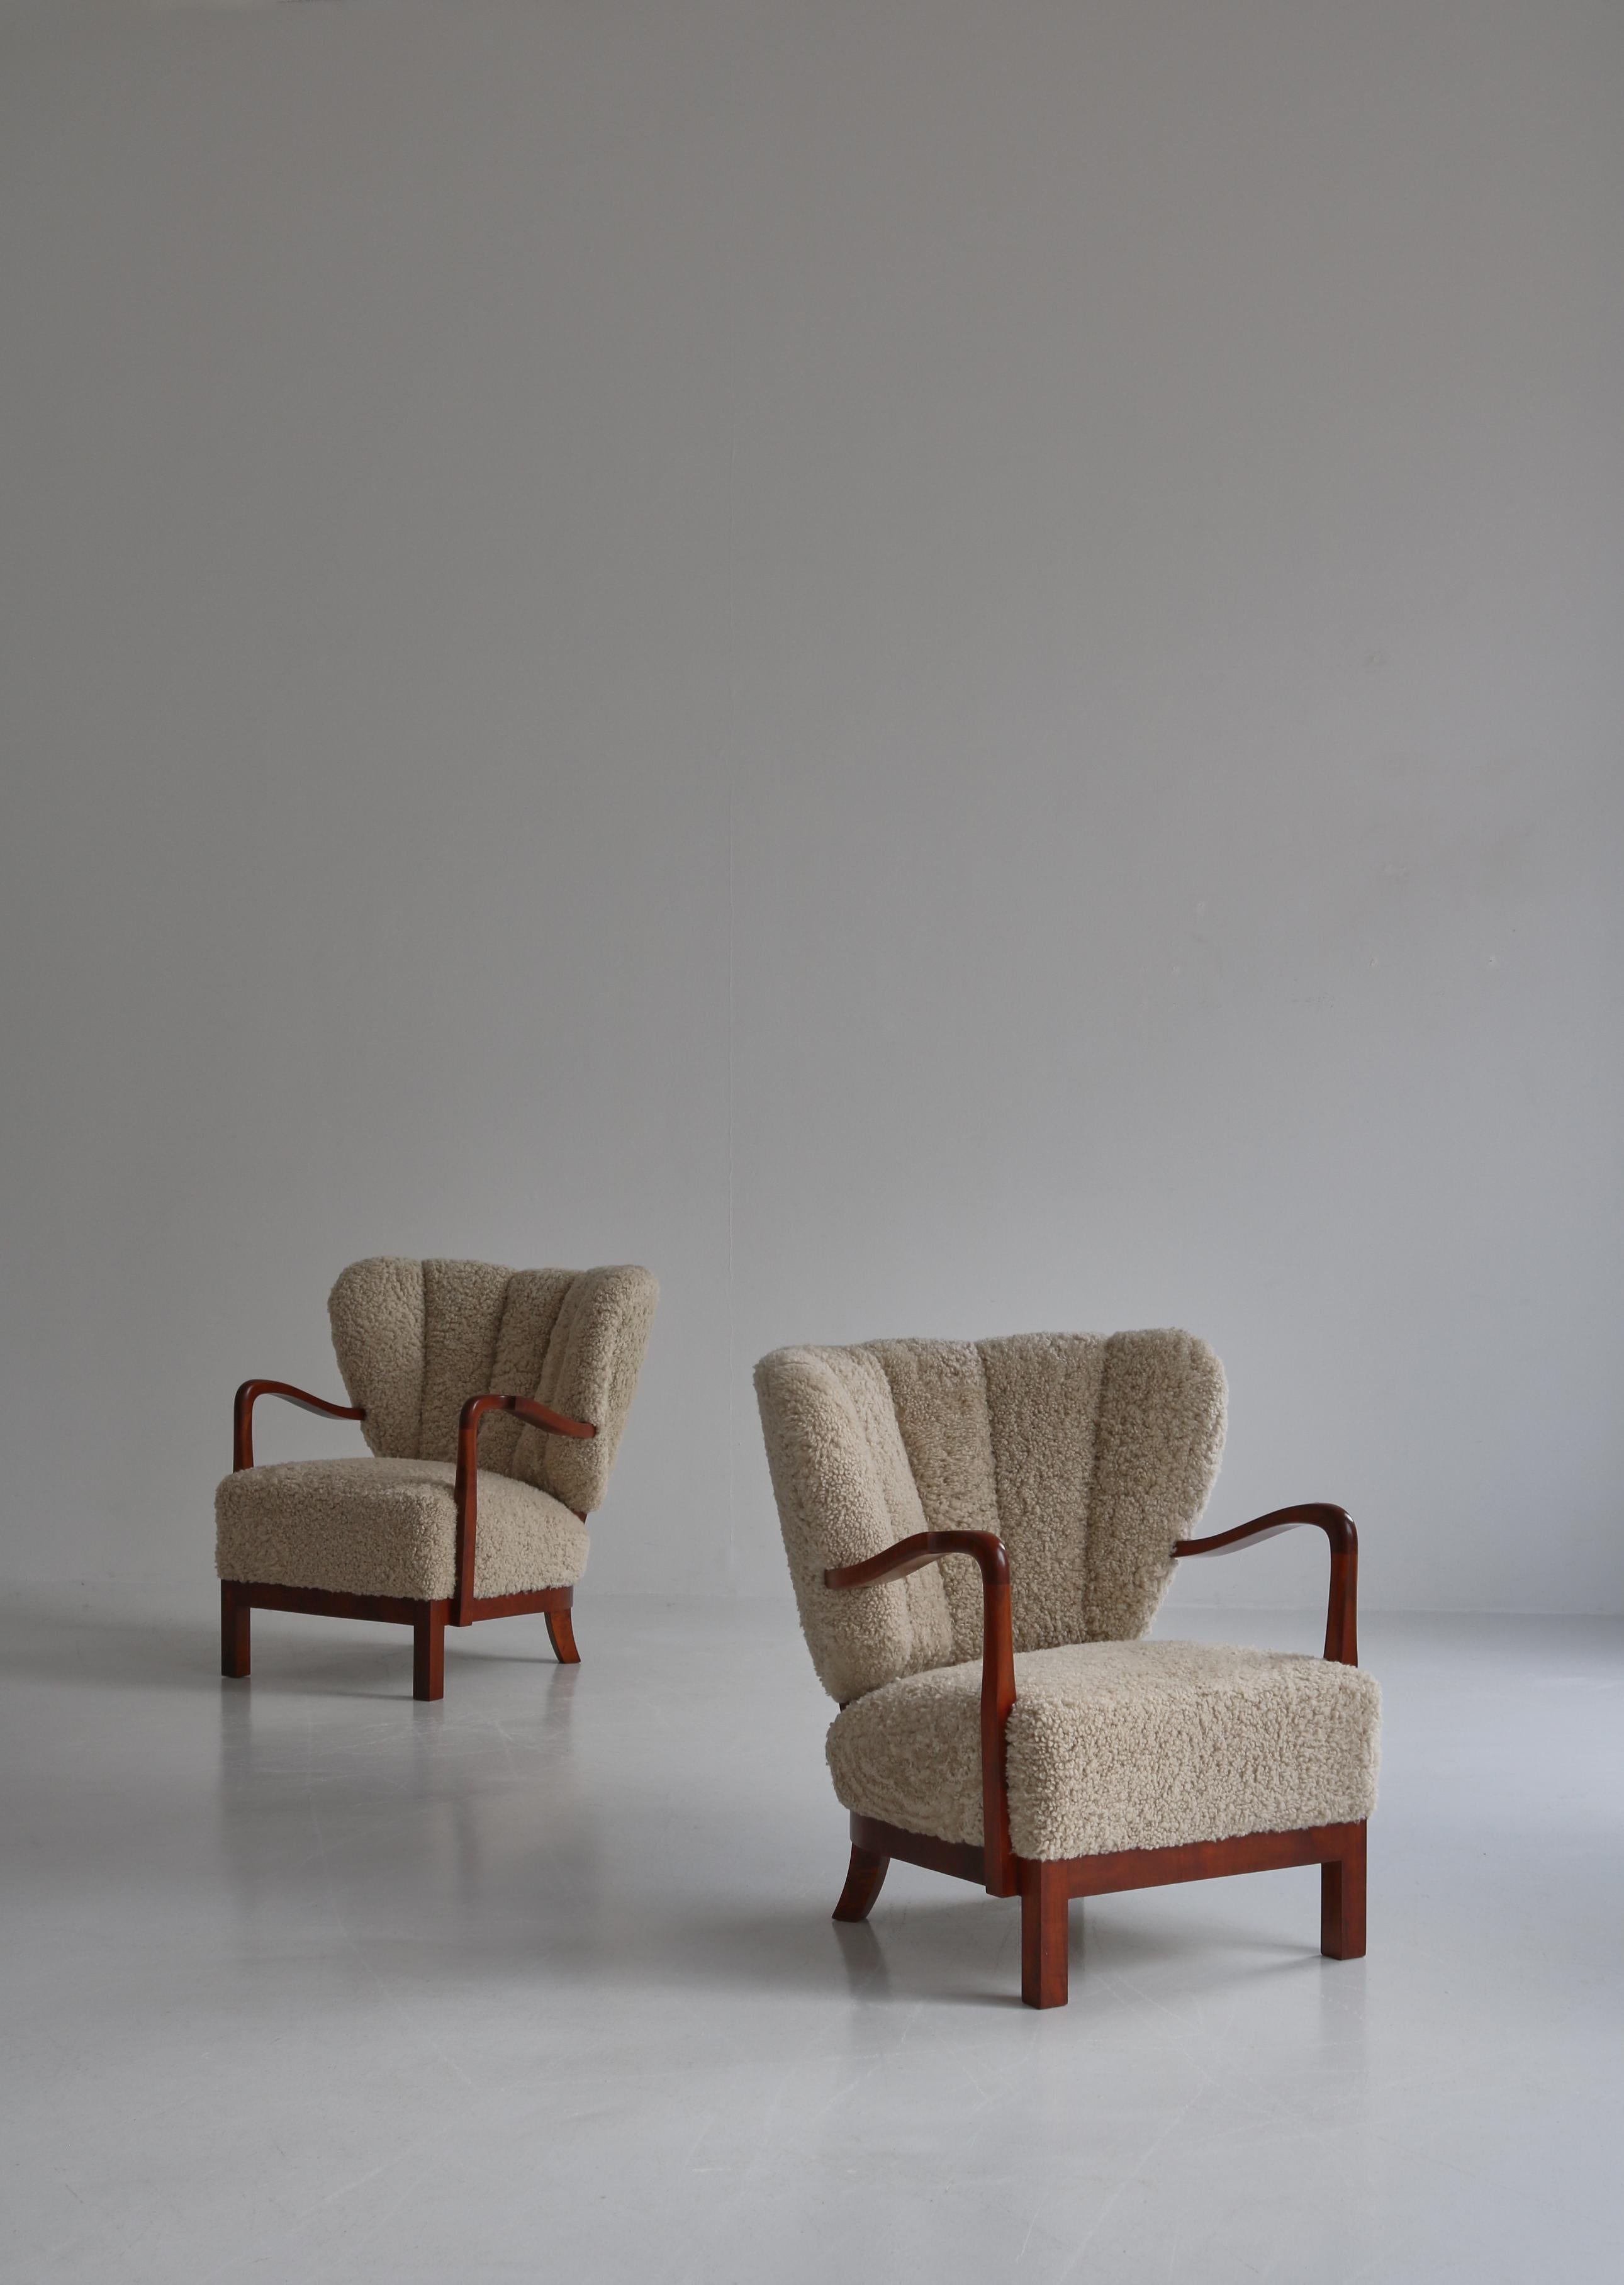 Viggo Boesen Lounge Chairs in Nutwood and Sheepskin, 1930s Danish Modern For Sale 14